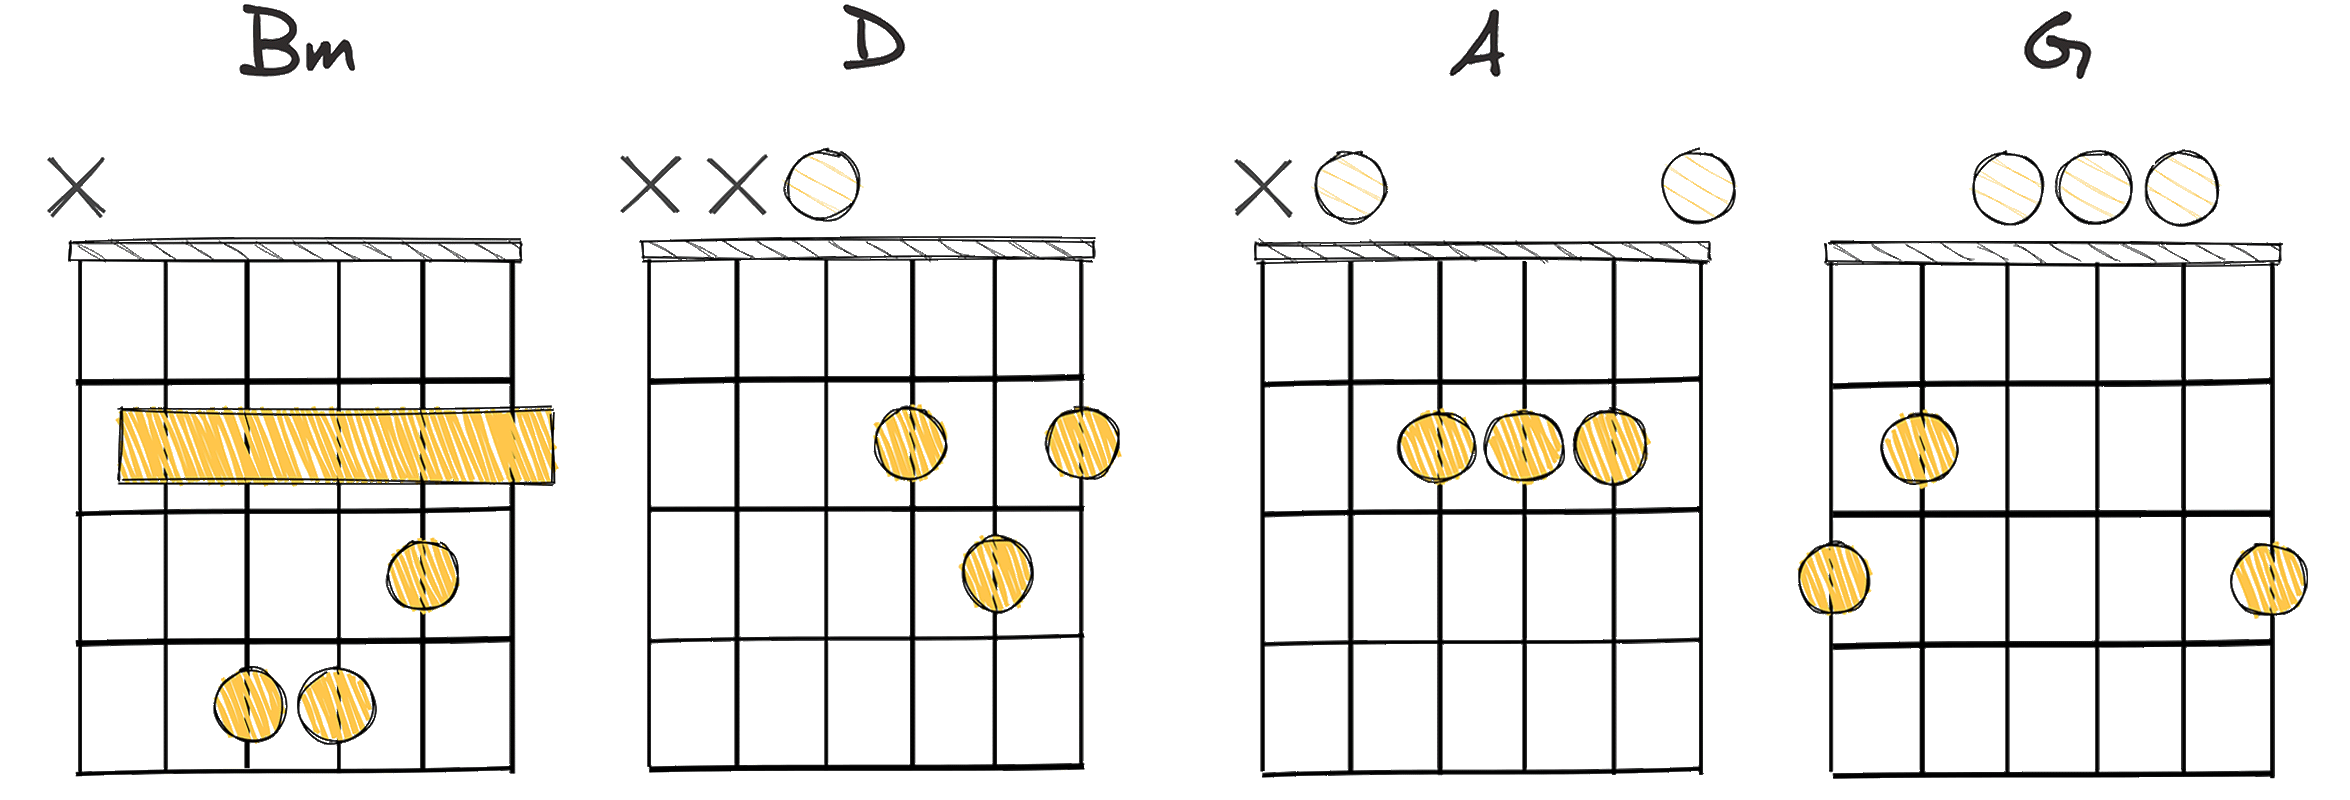 vi-I-V-IV (6-1-5-4) chords diagram